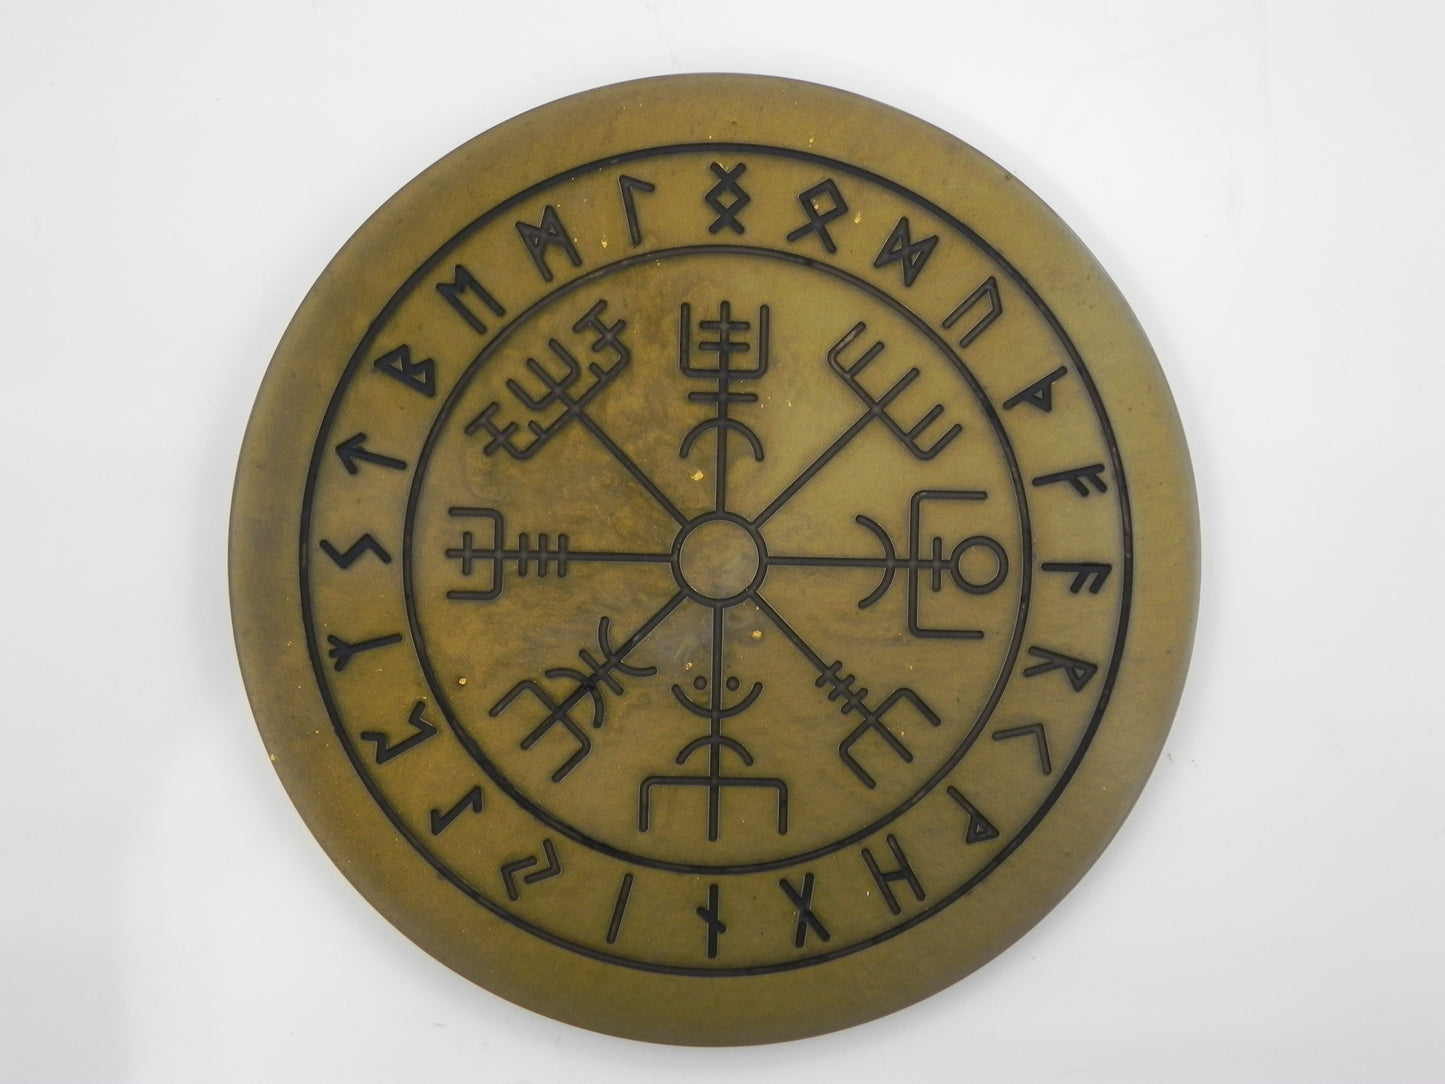 Rune plate: Gold